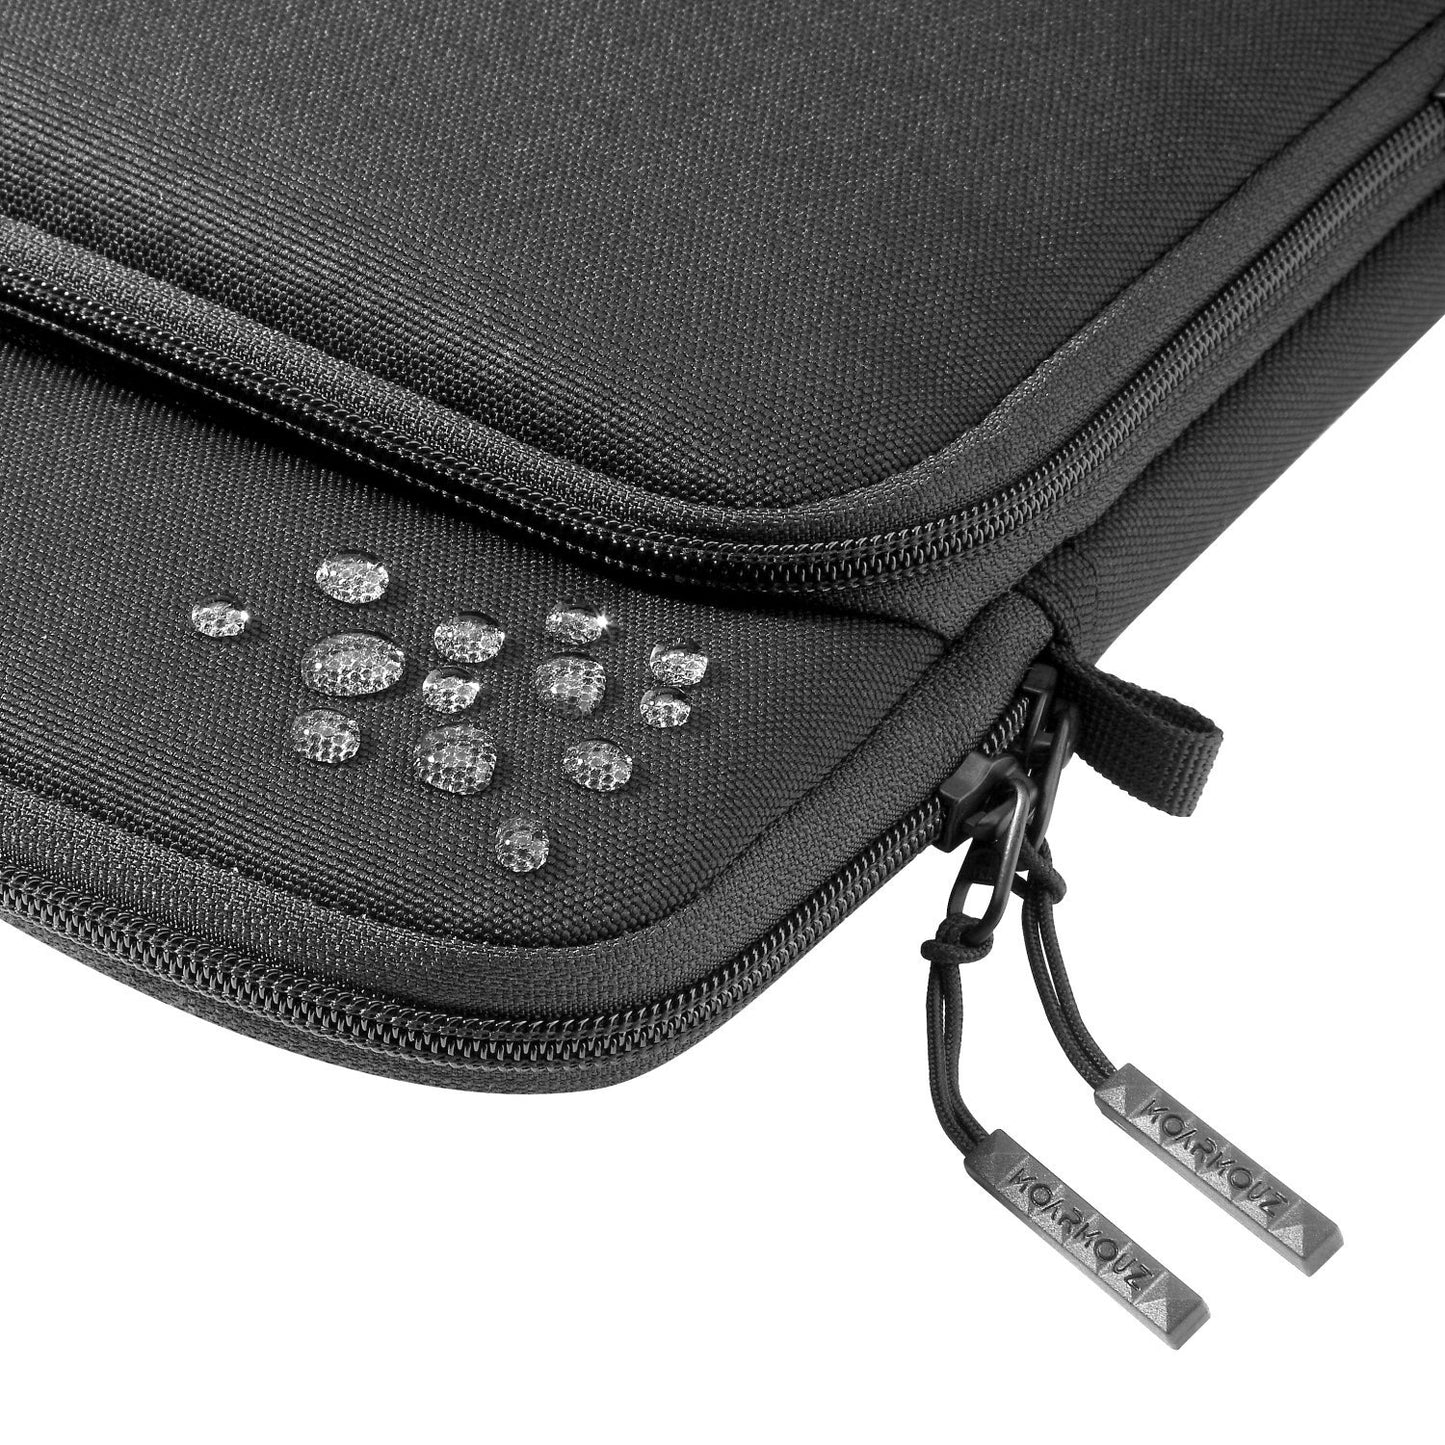 MoArmouz - Water Resistant Shoulder Bag for Tablets and Laptops